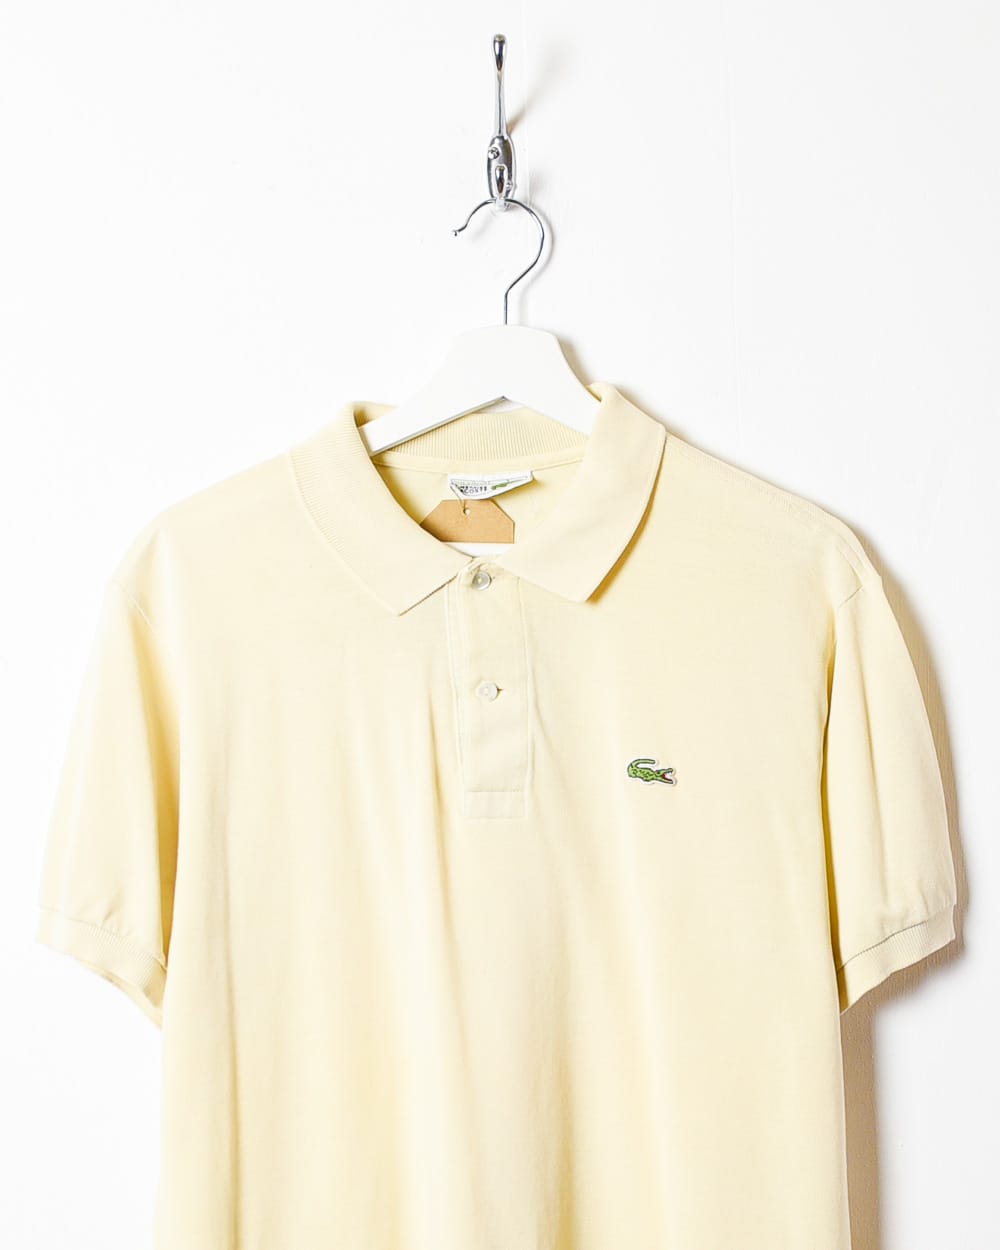 Yellow Chemise Lacoste Polo Shirt - Medium